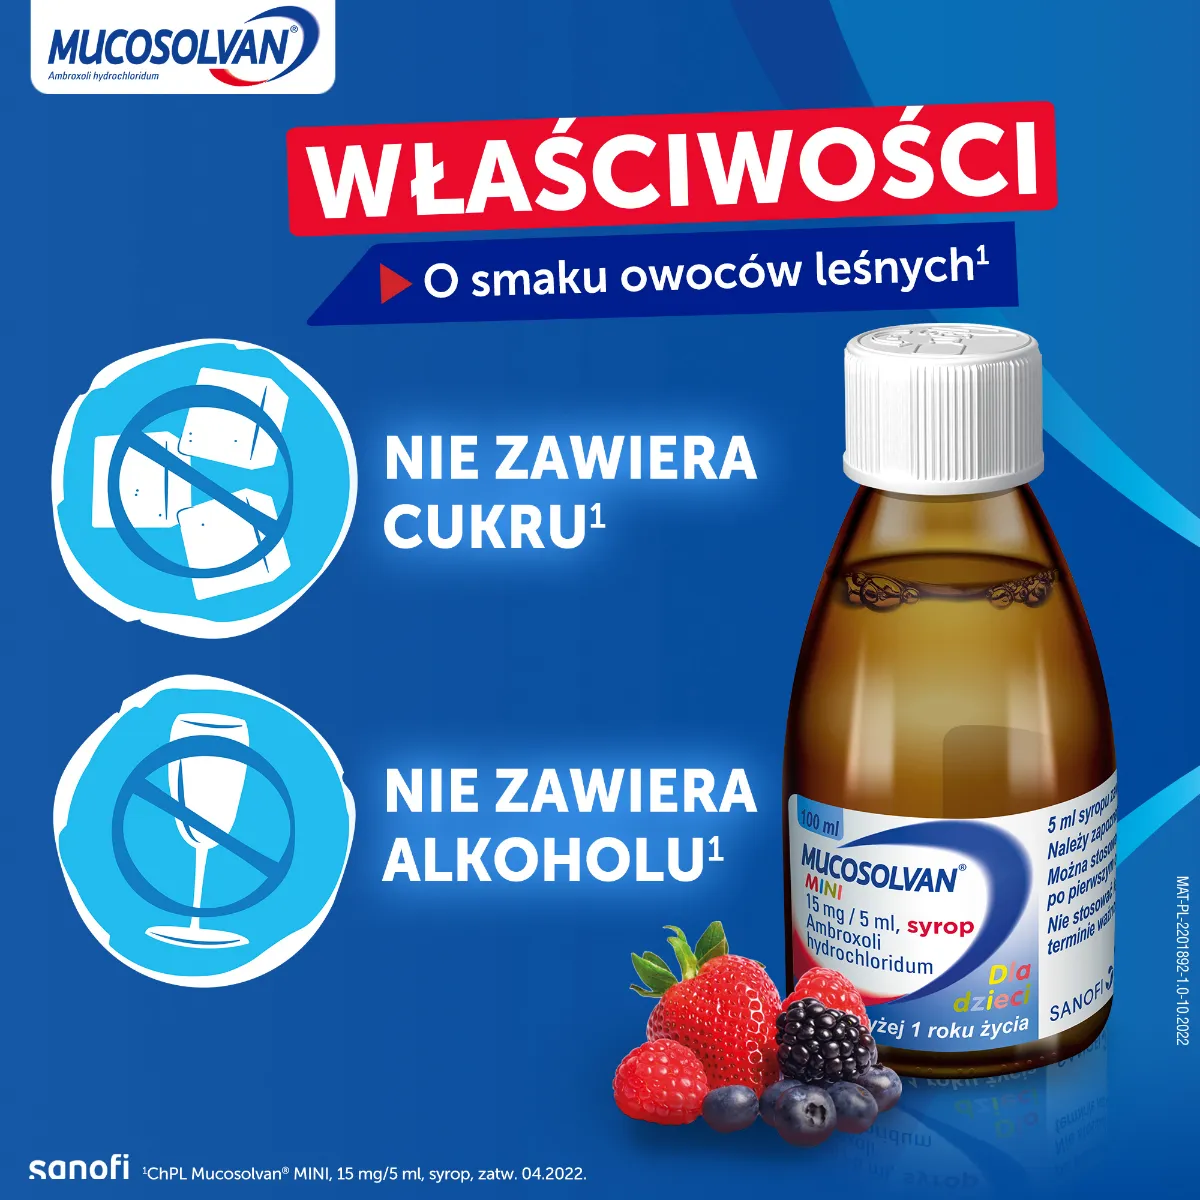 Mucosolvan Mini, 15mg/5 ml, syrop, 100 ml 